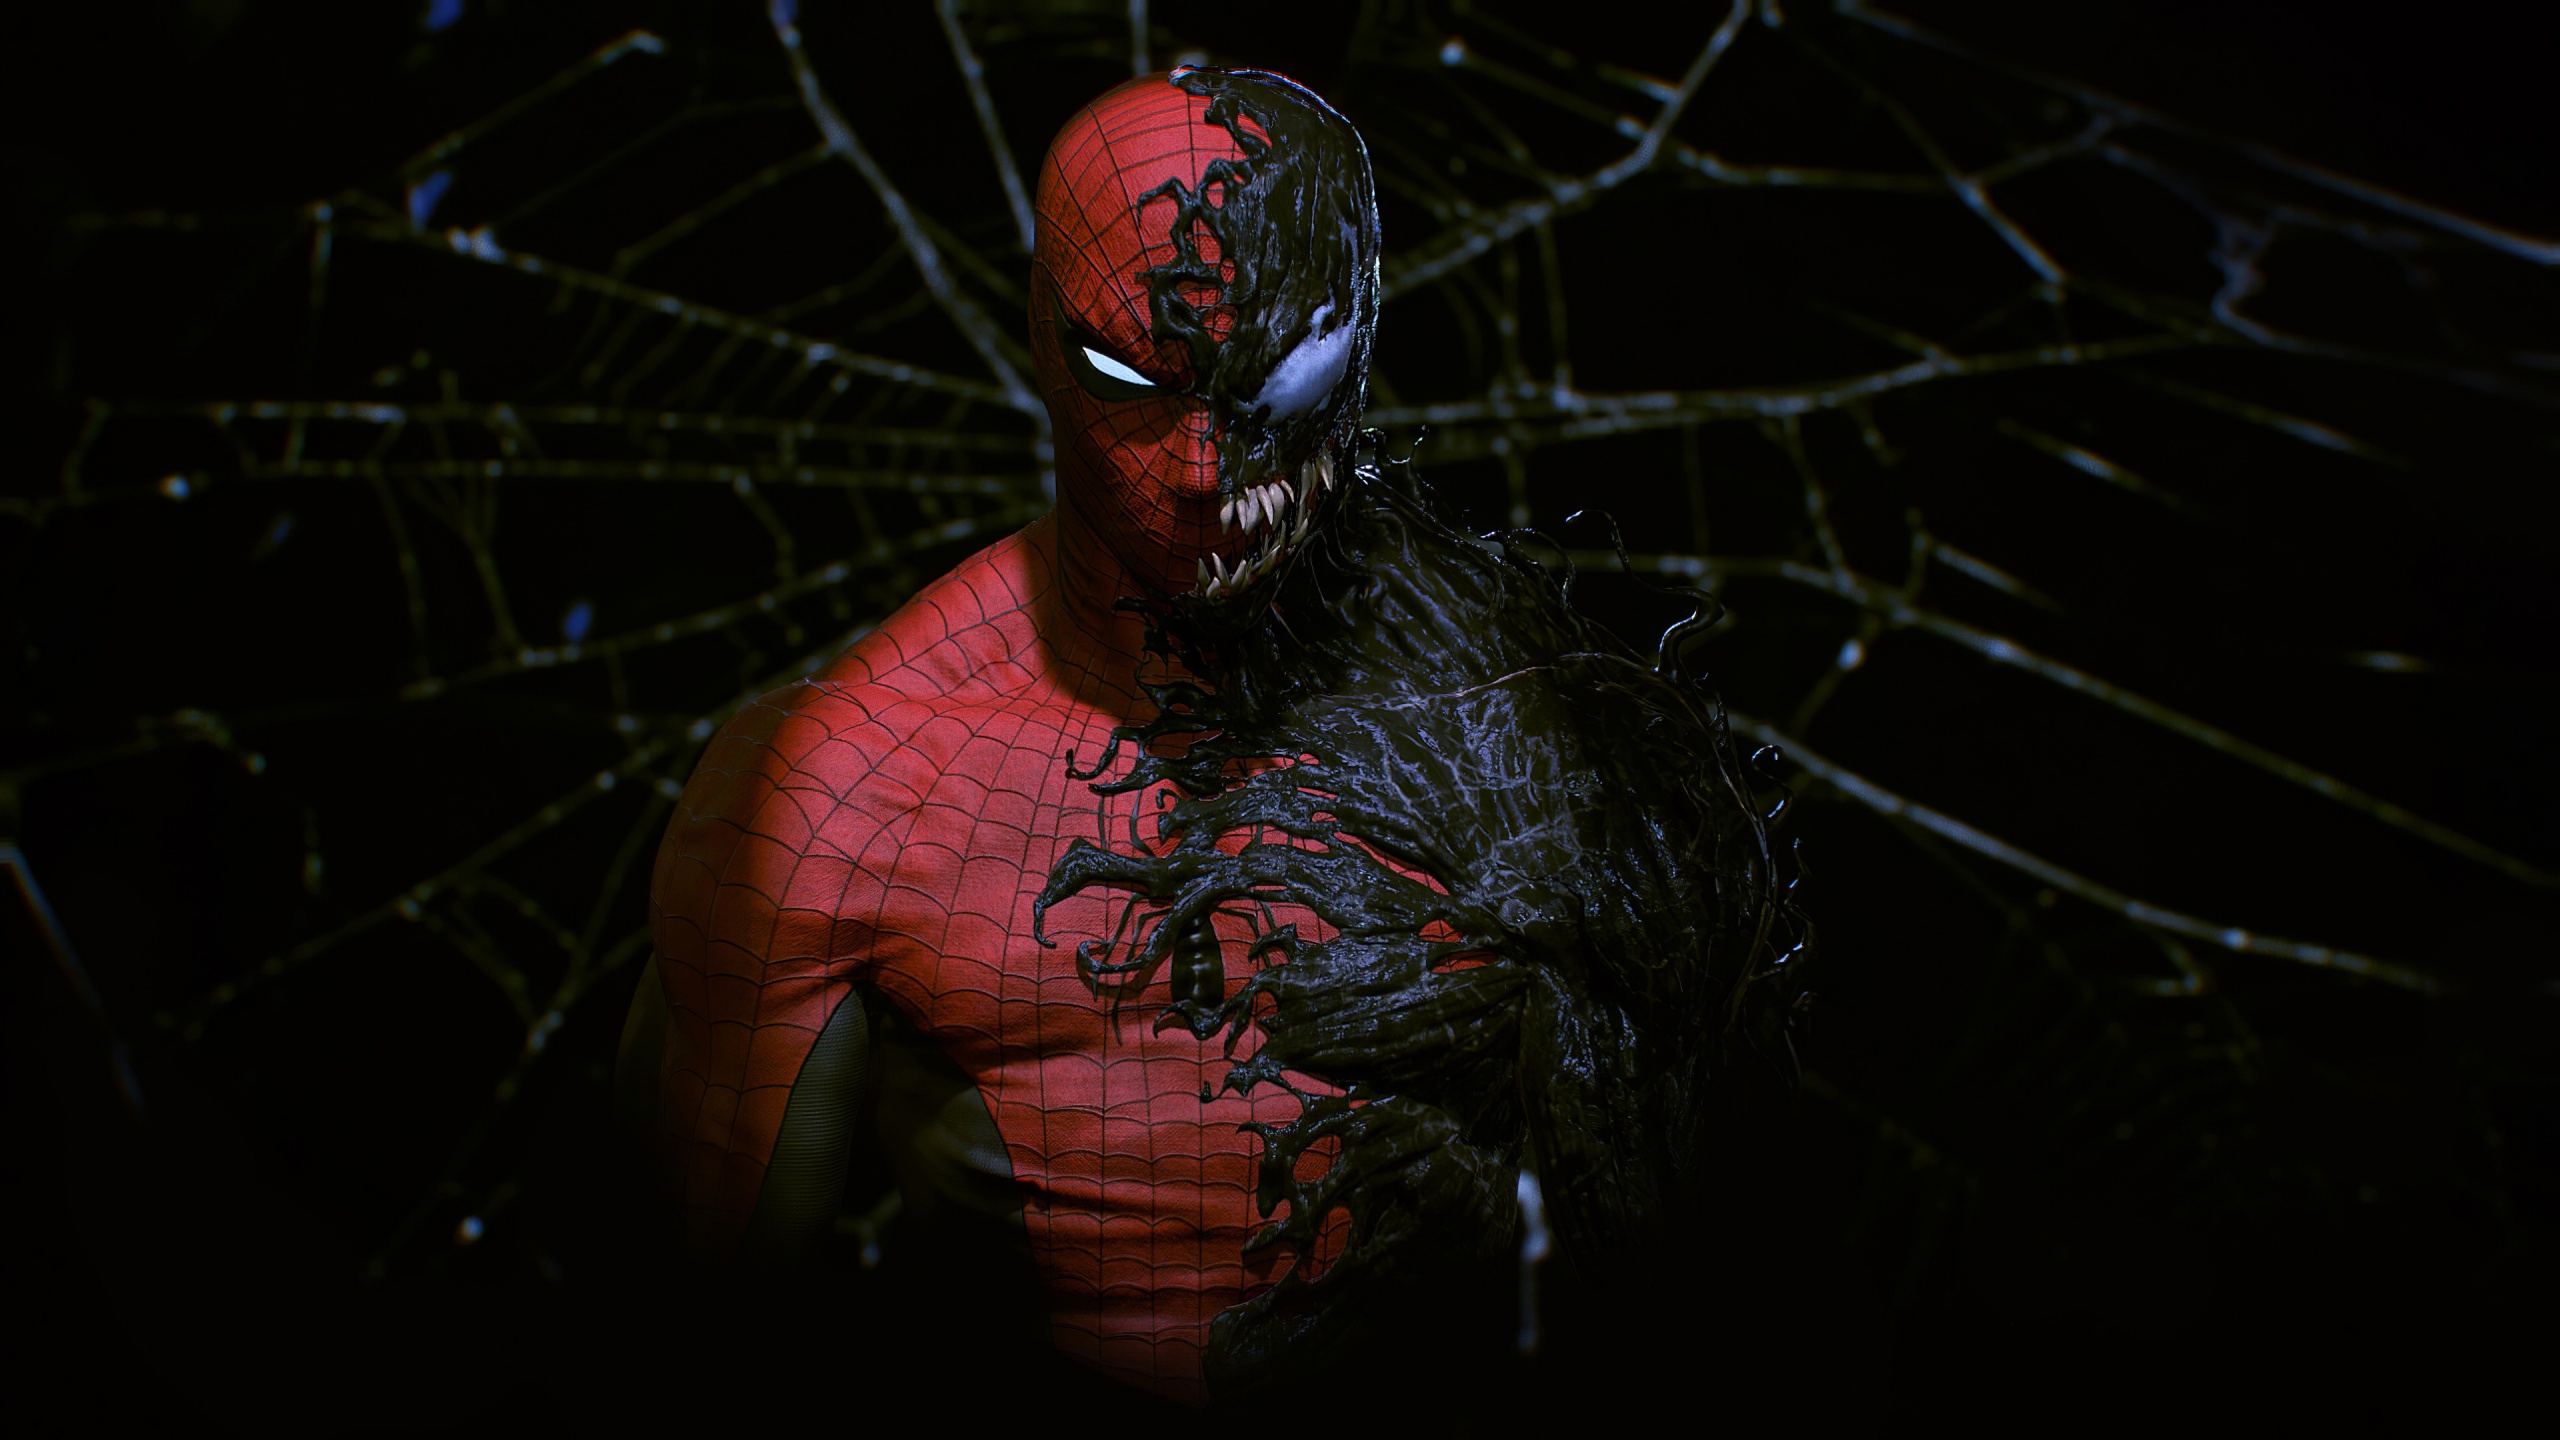 Spider-Man Wallpaper 4K, Venom, Black background, Graphics CGI, #2954